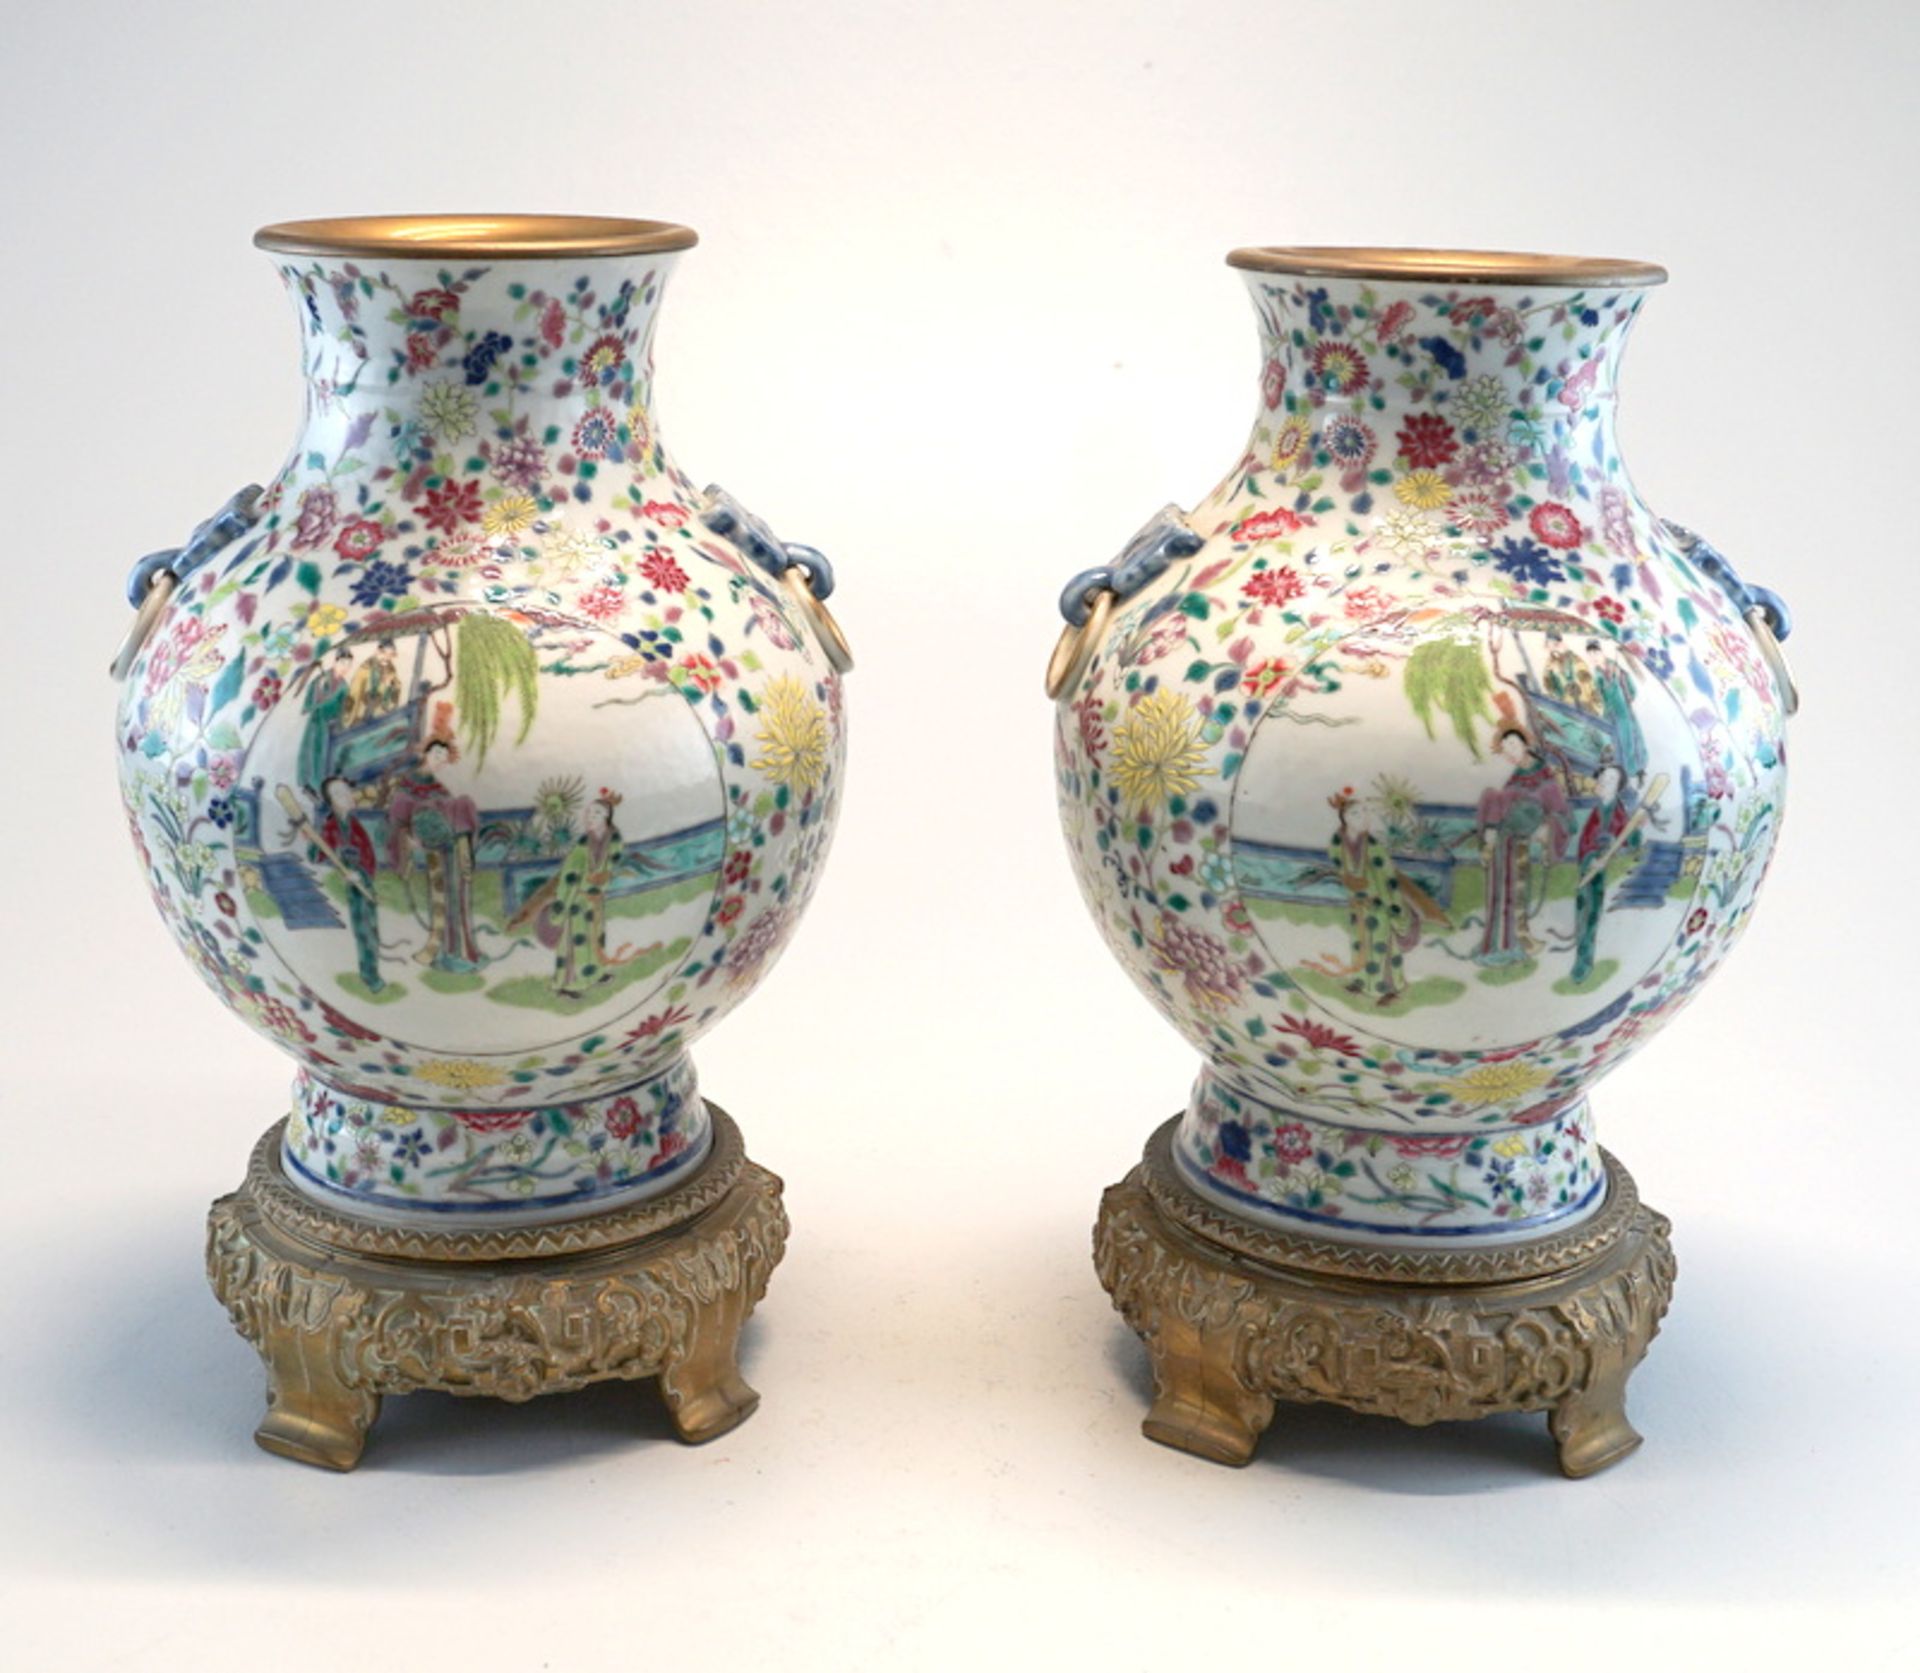 Pärchen Millefleur Vasen bronzemontiert China Kangxi Marke 18/19 Jh.